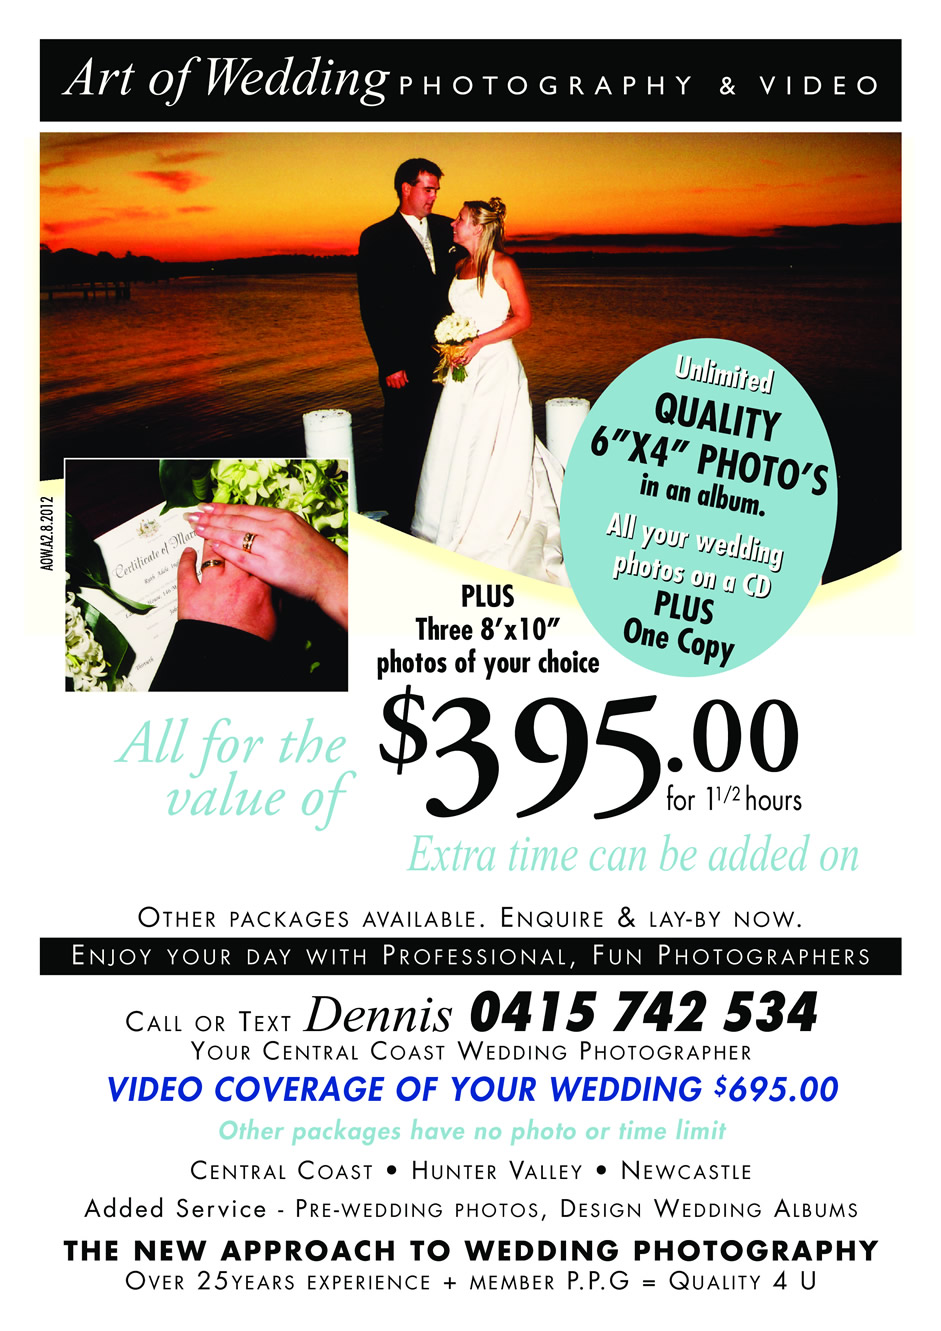 Art of Wedding Photography Gosford Central Coast - NSW | OBZ Online Business Zone